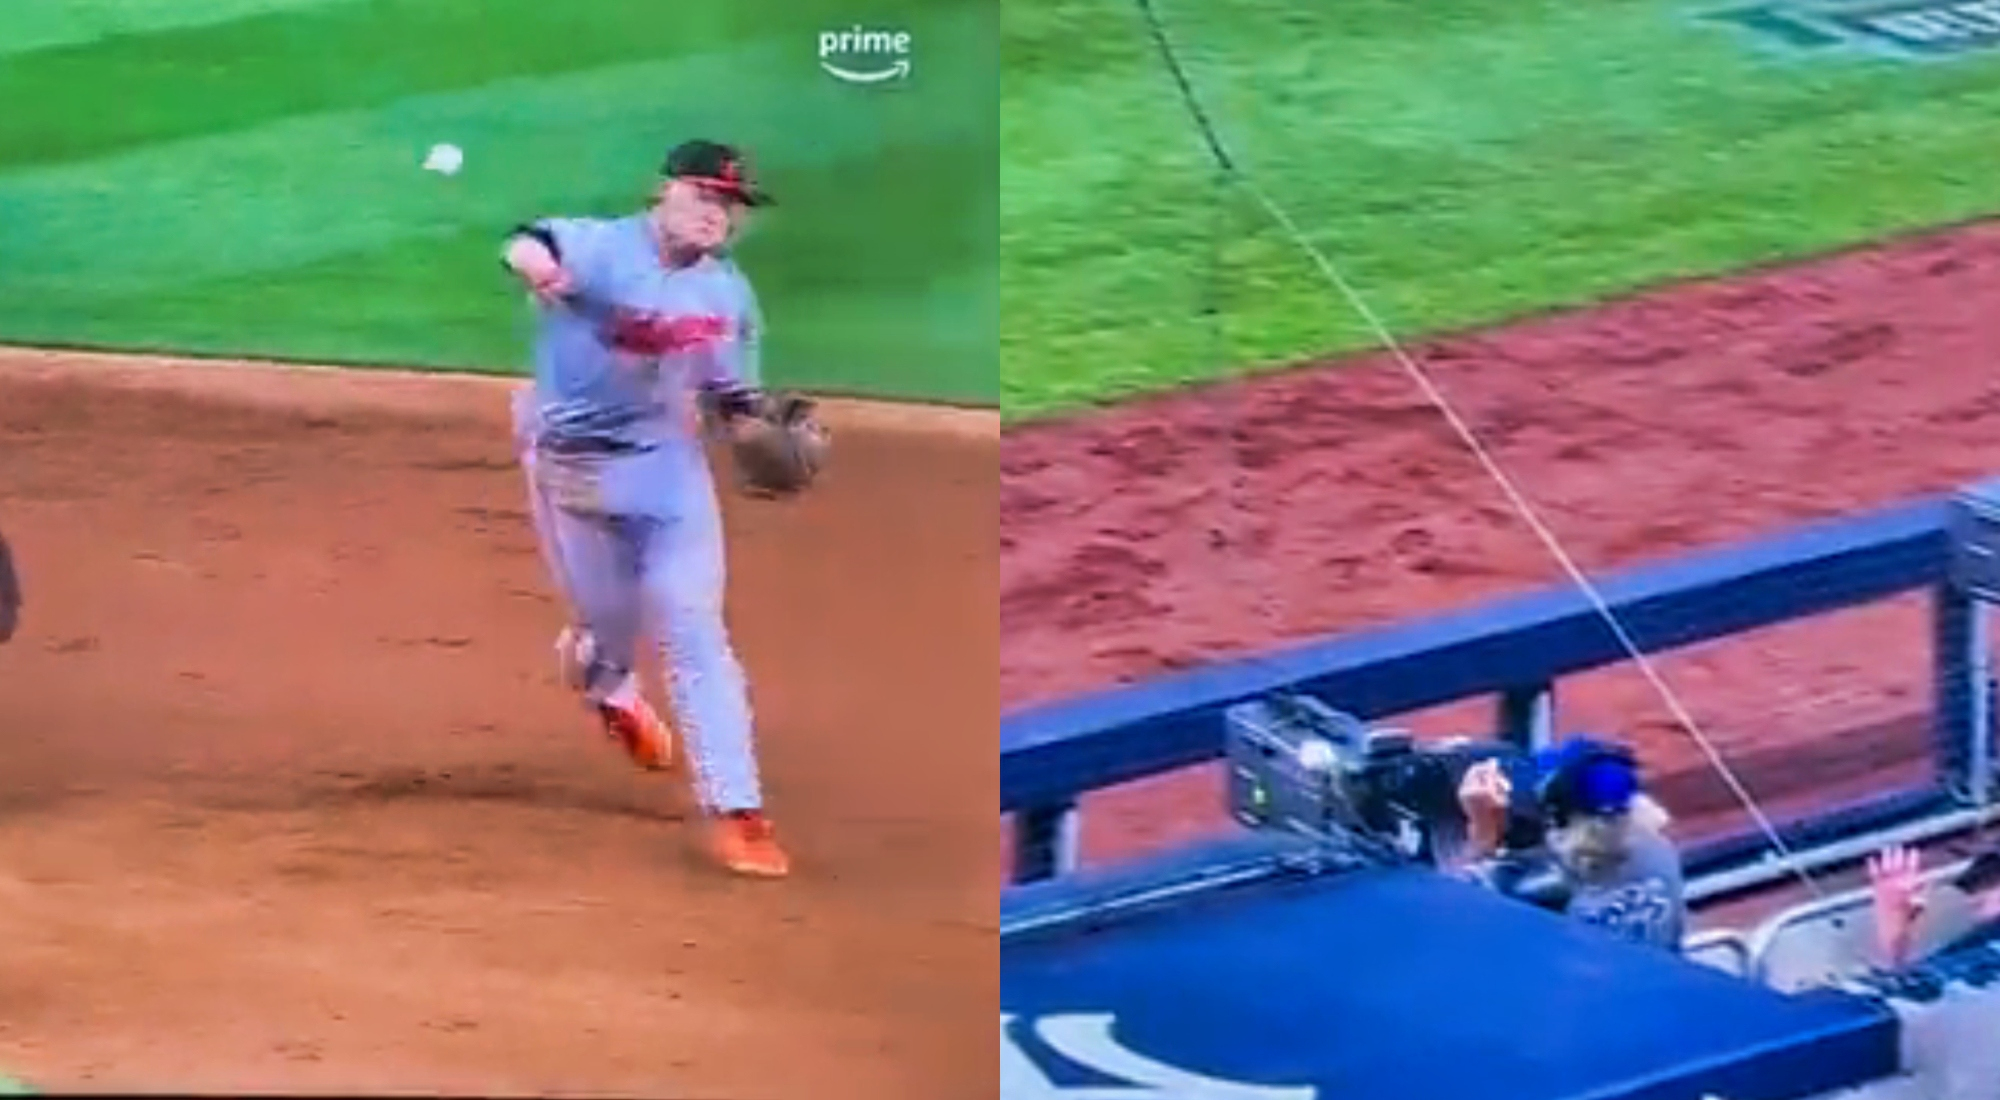 Cameraman at Yankee Stadium injured by wild throw from Orioles